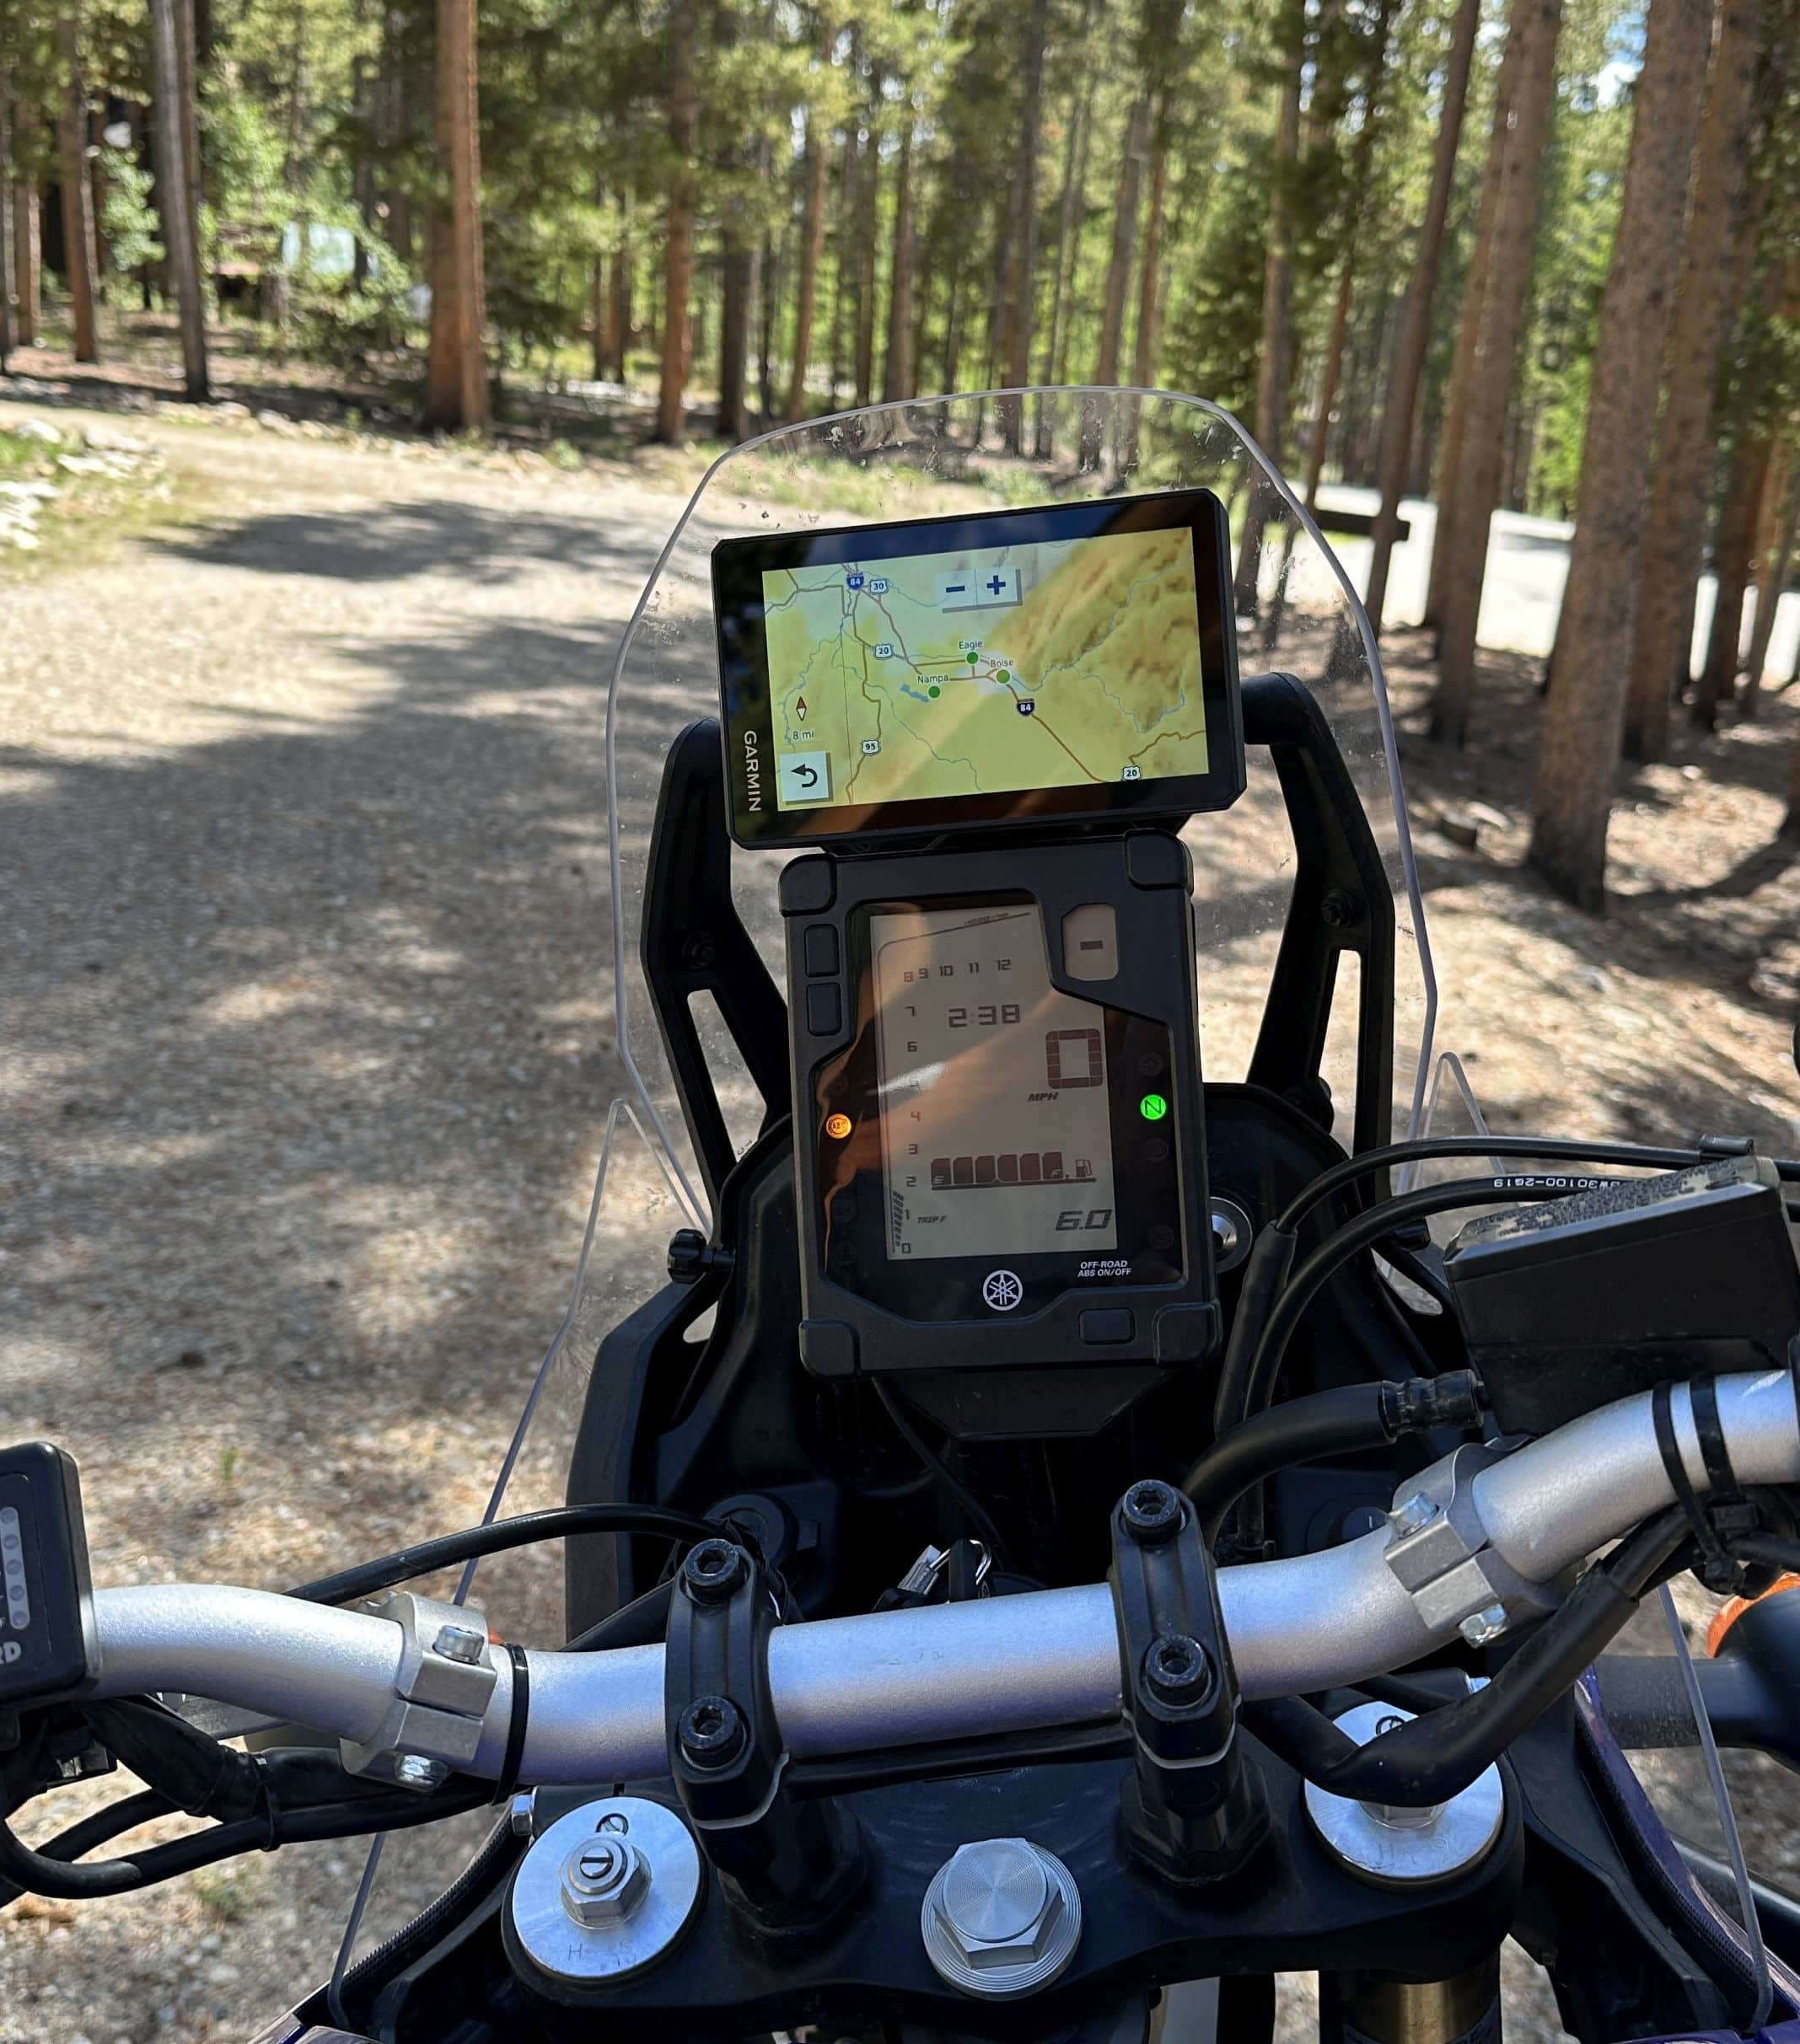 GPS unit on motorcycle